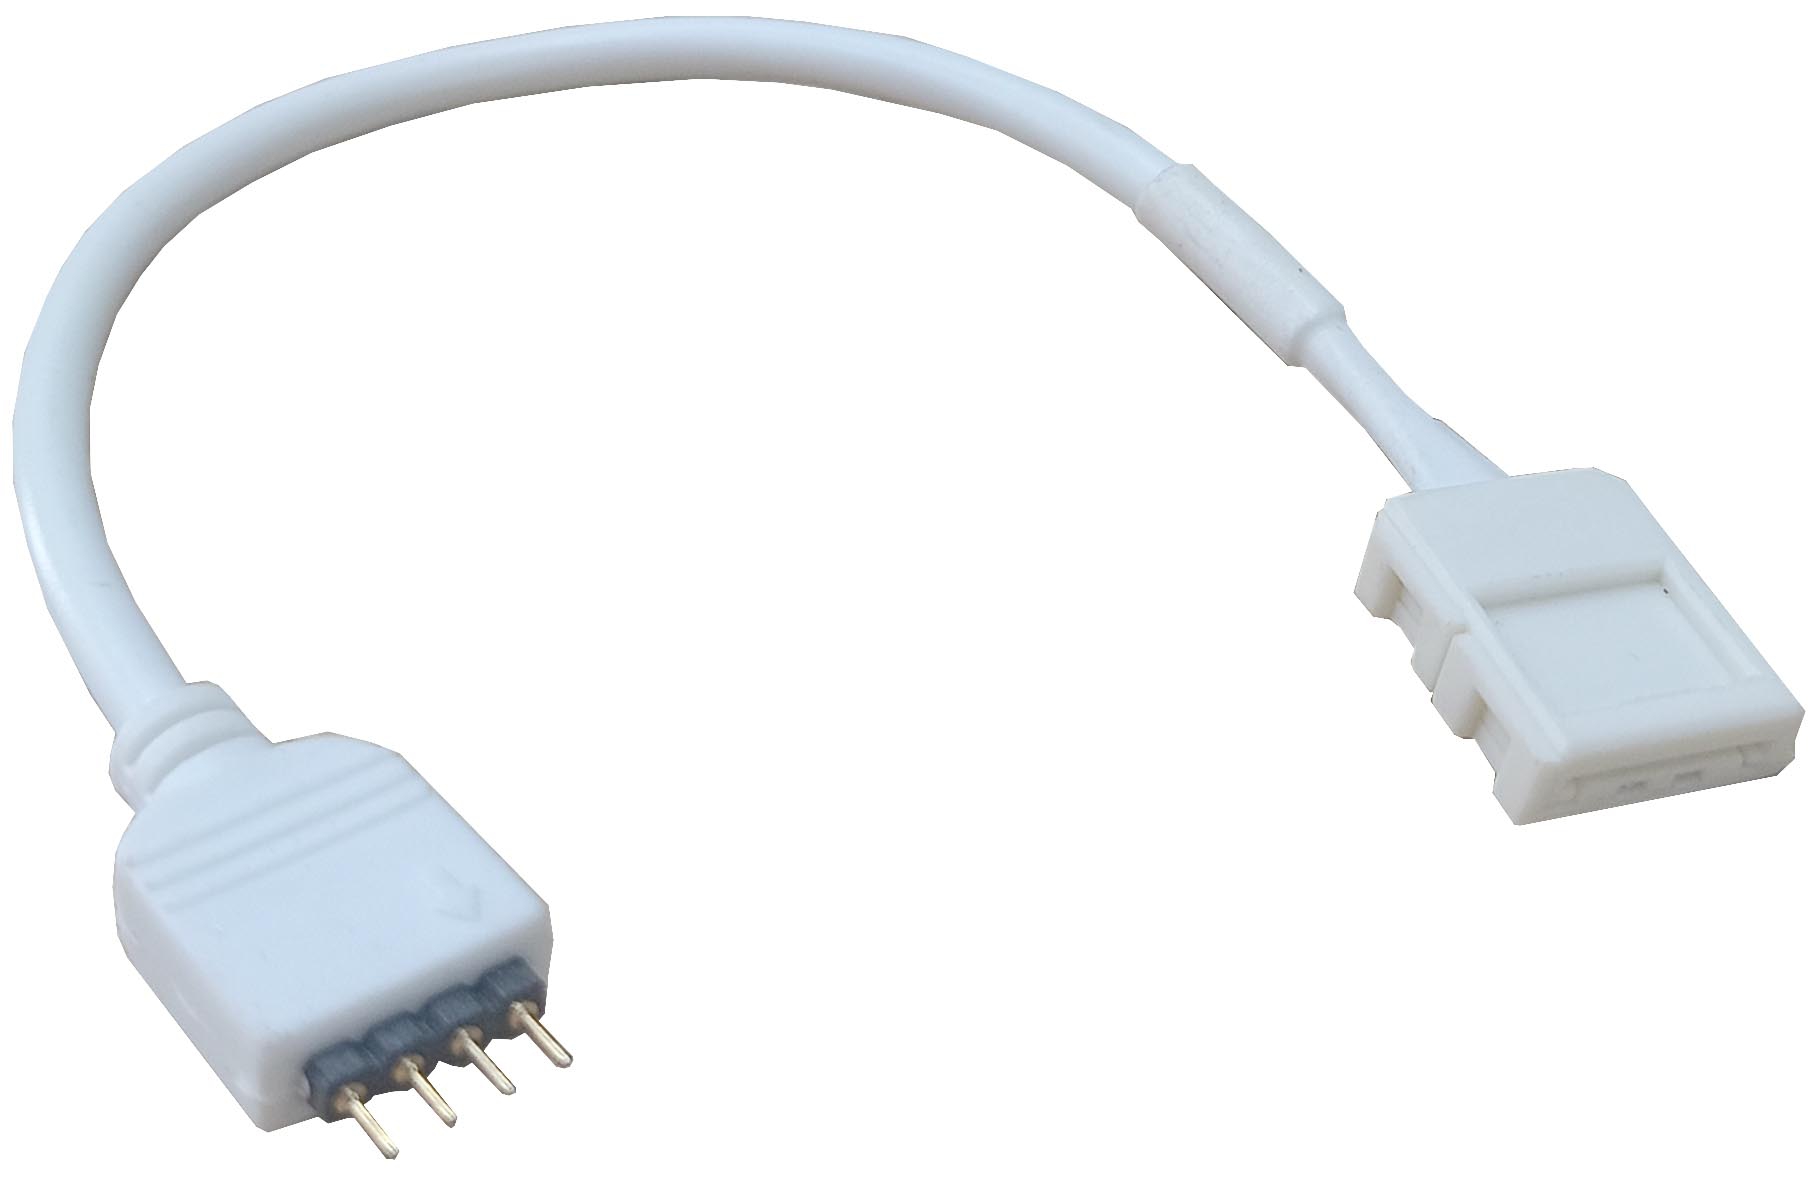 Cable conector para Tira LED 220V RGB. Macho y Hembra.